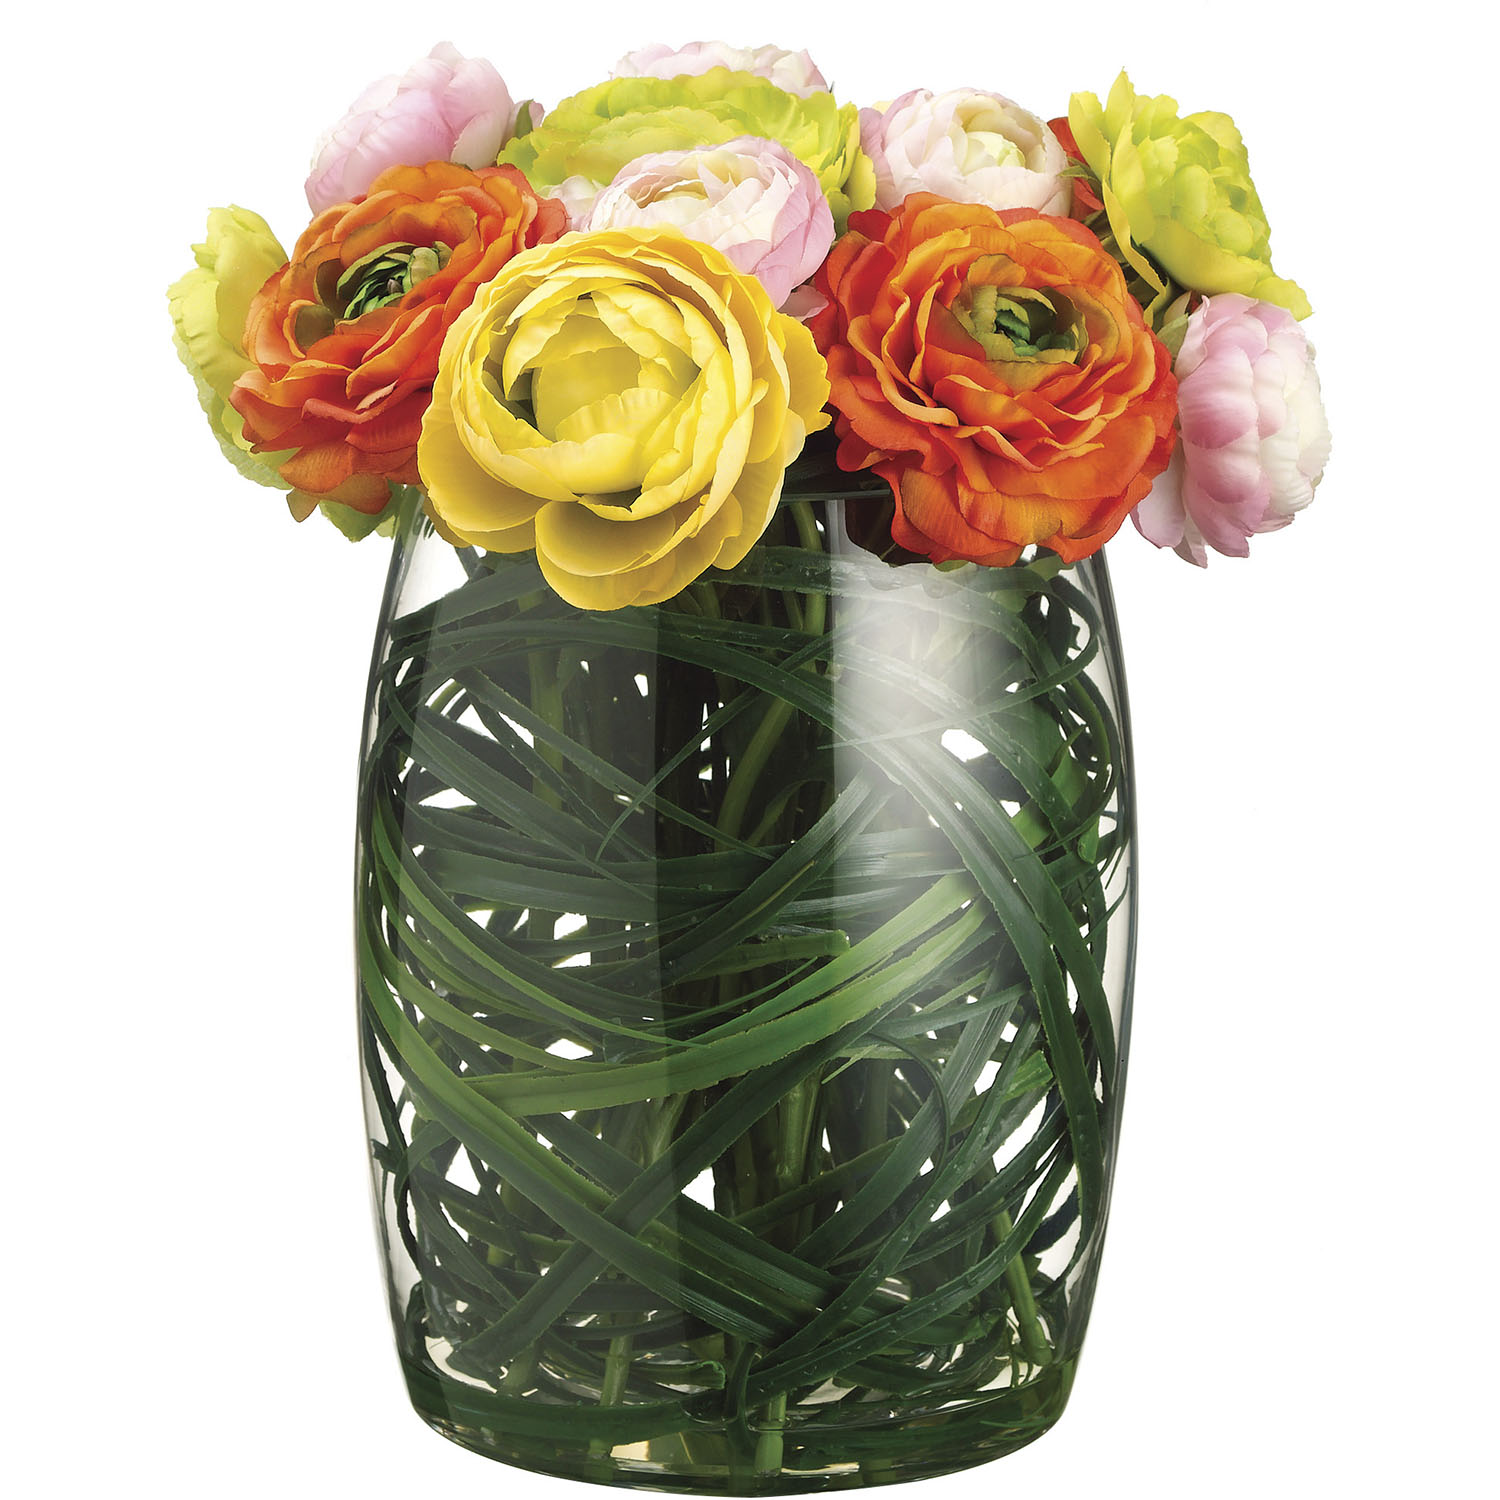 13 Inch Ranunculus And Grass Arrangement In Glass Vase